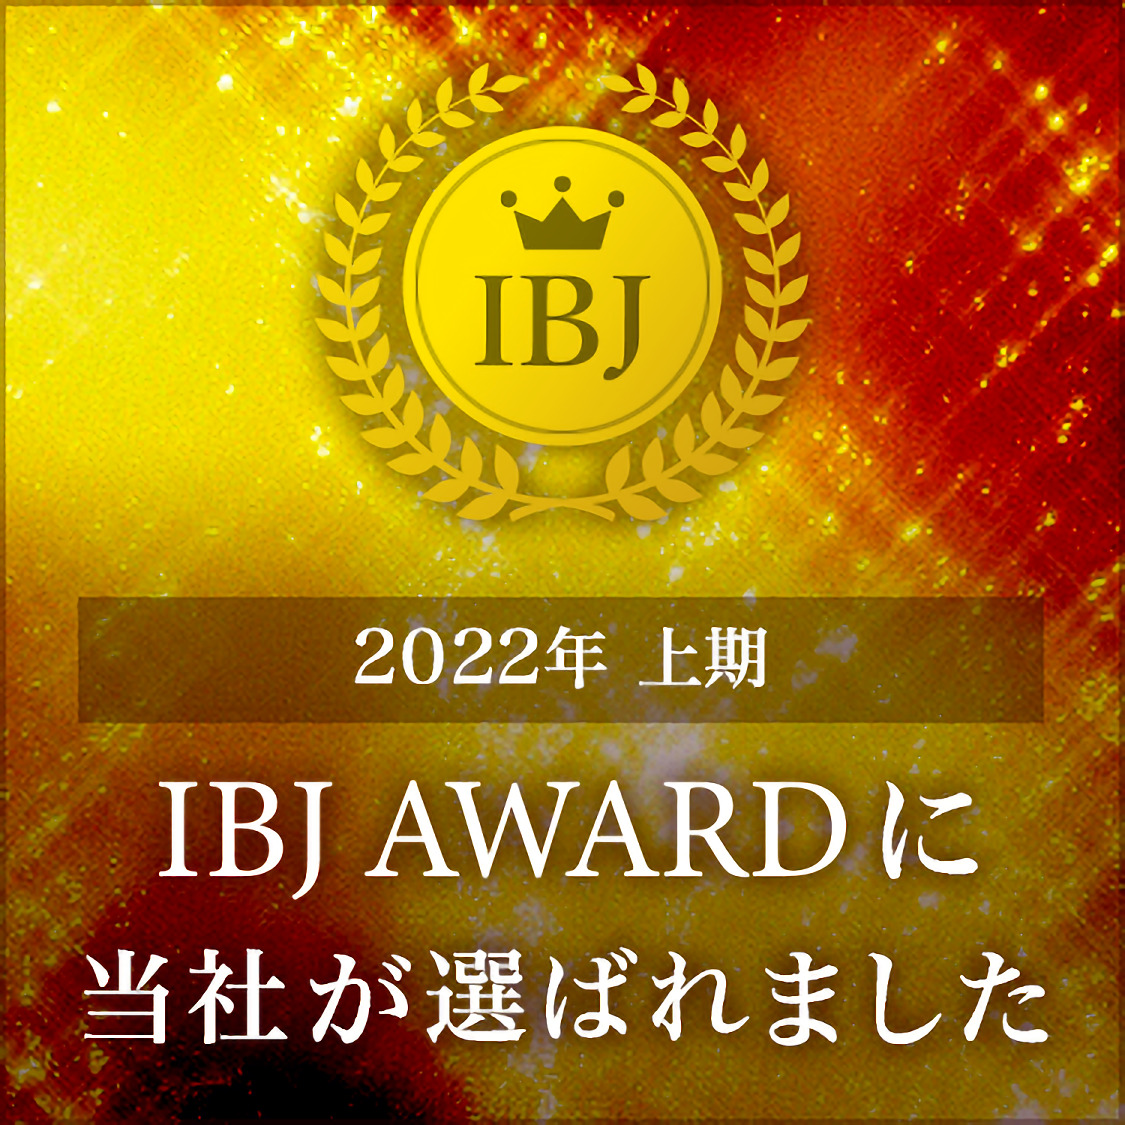 ★IBJ Award2022上期★全3店舗でIBJ Award(PREMIUM部門)を受賞!!